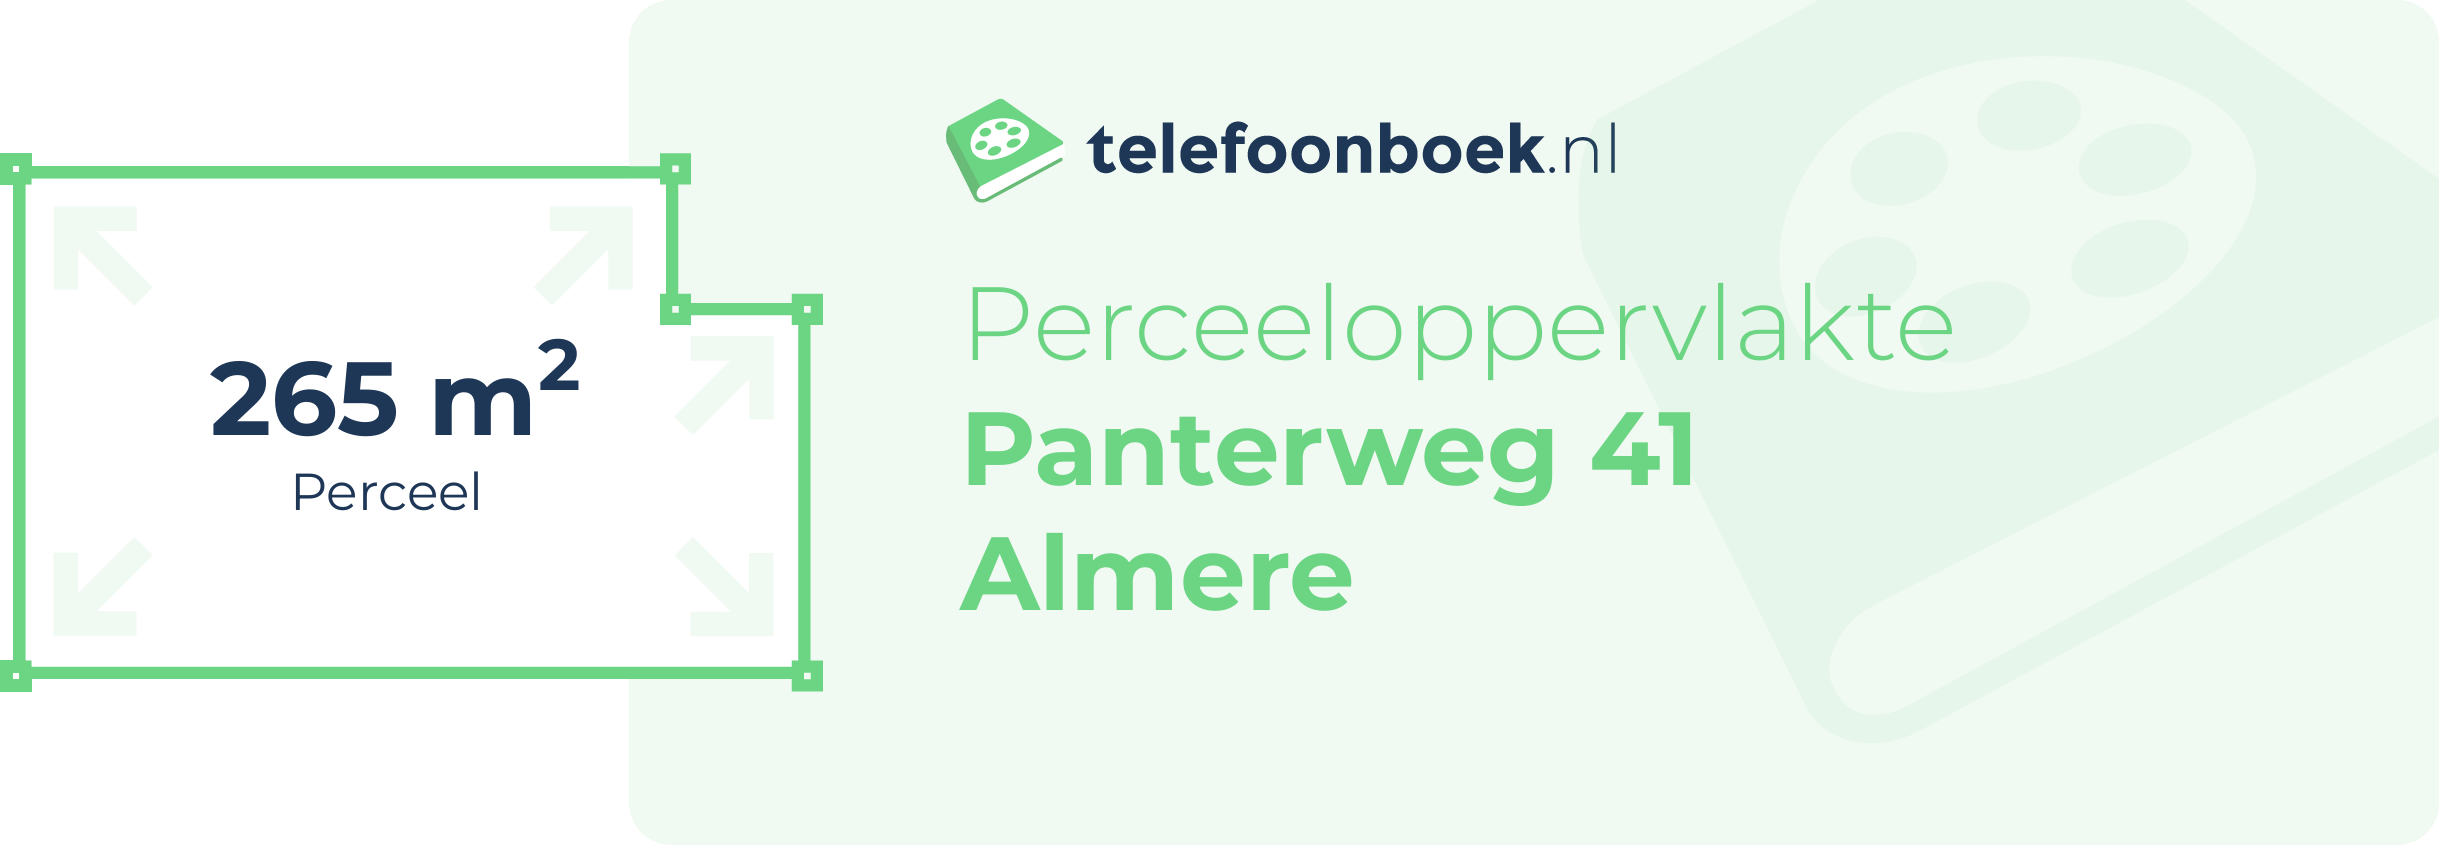 Perceeloppervlakte Panterweg 41 Almere